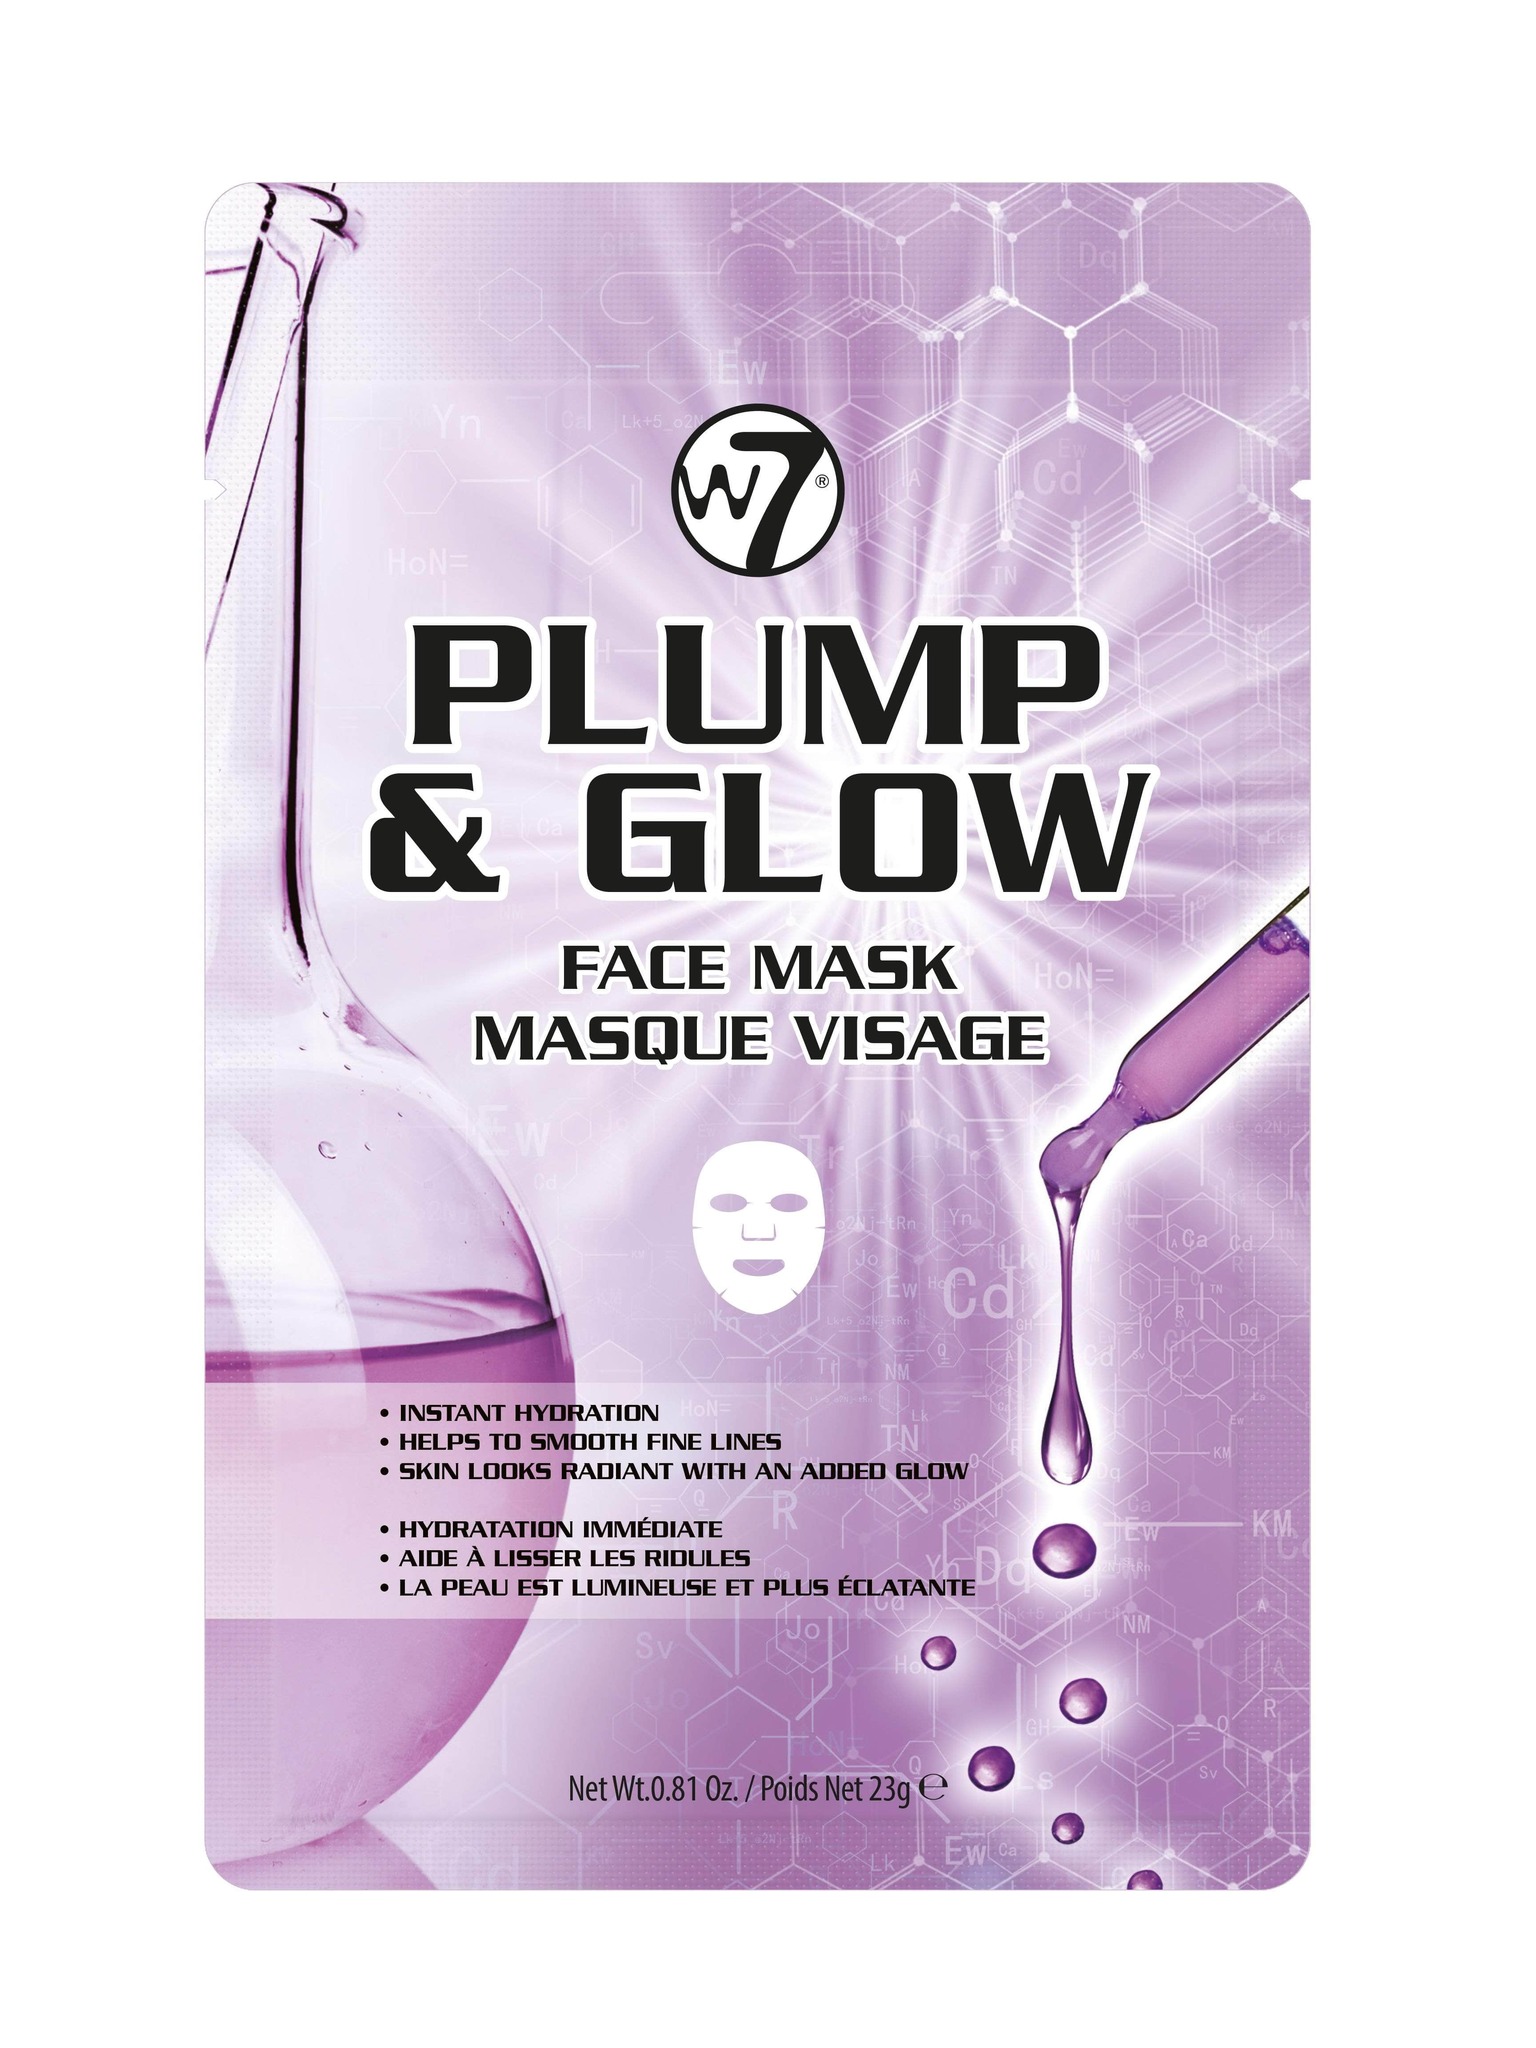 W7 PLUMP & GLOW Face Mask